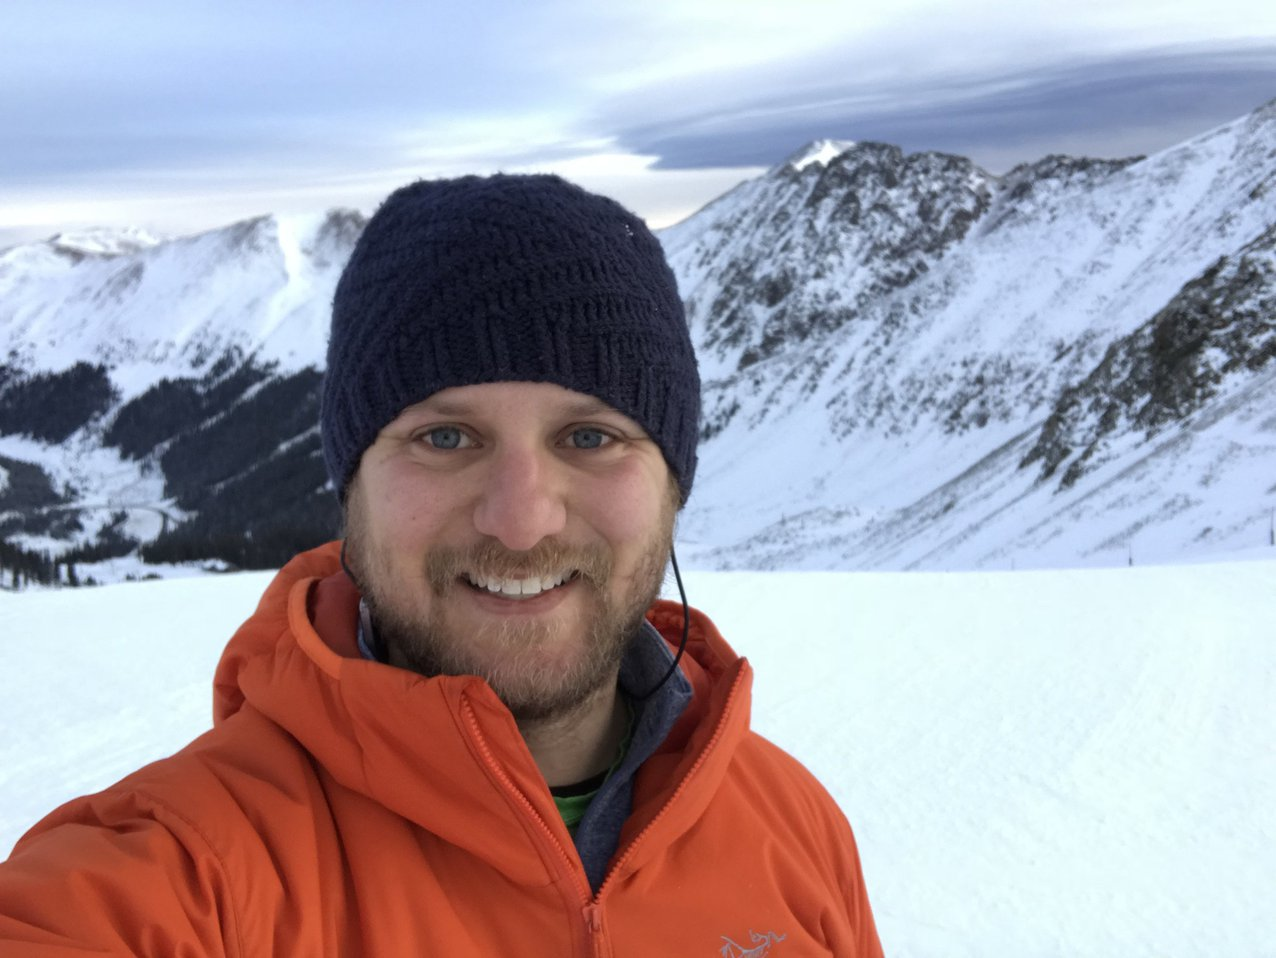 Jon selfie in the mountains